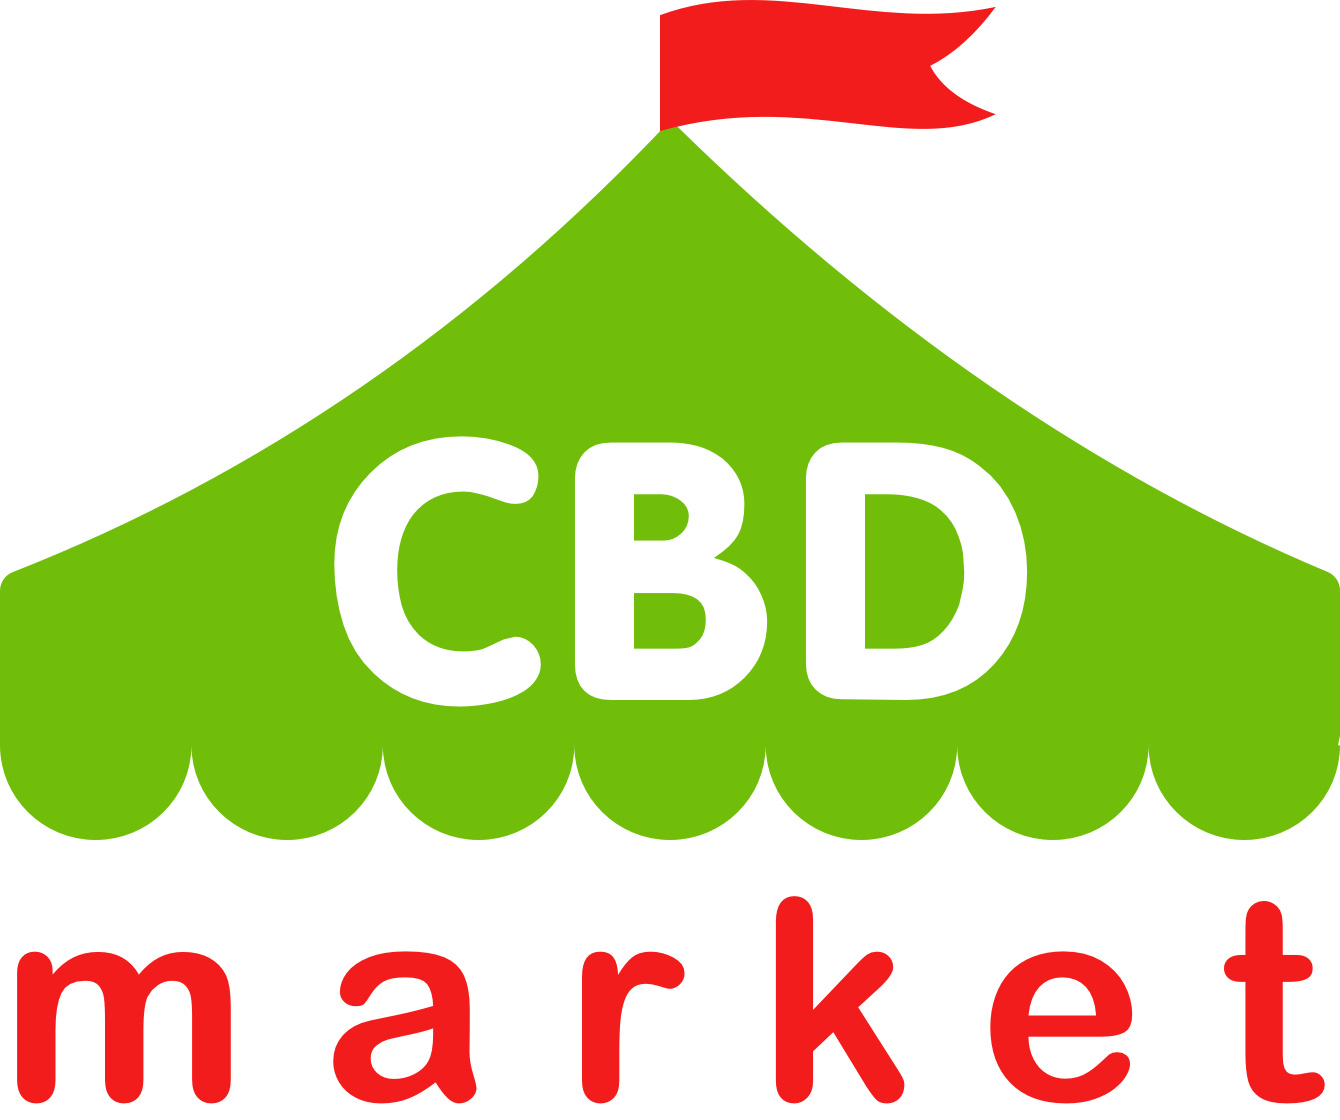 CBD.market